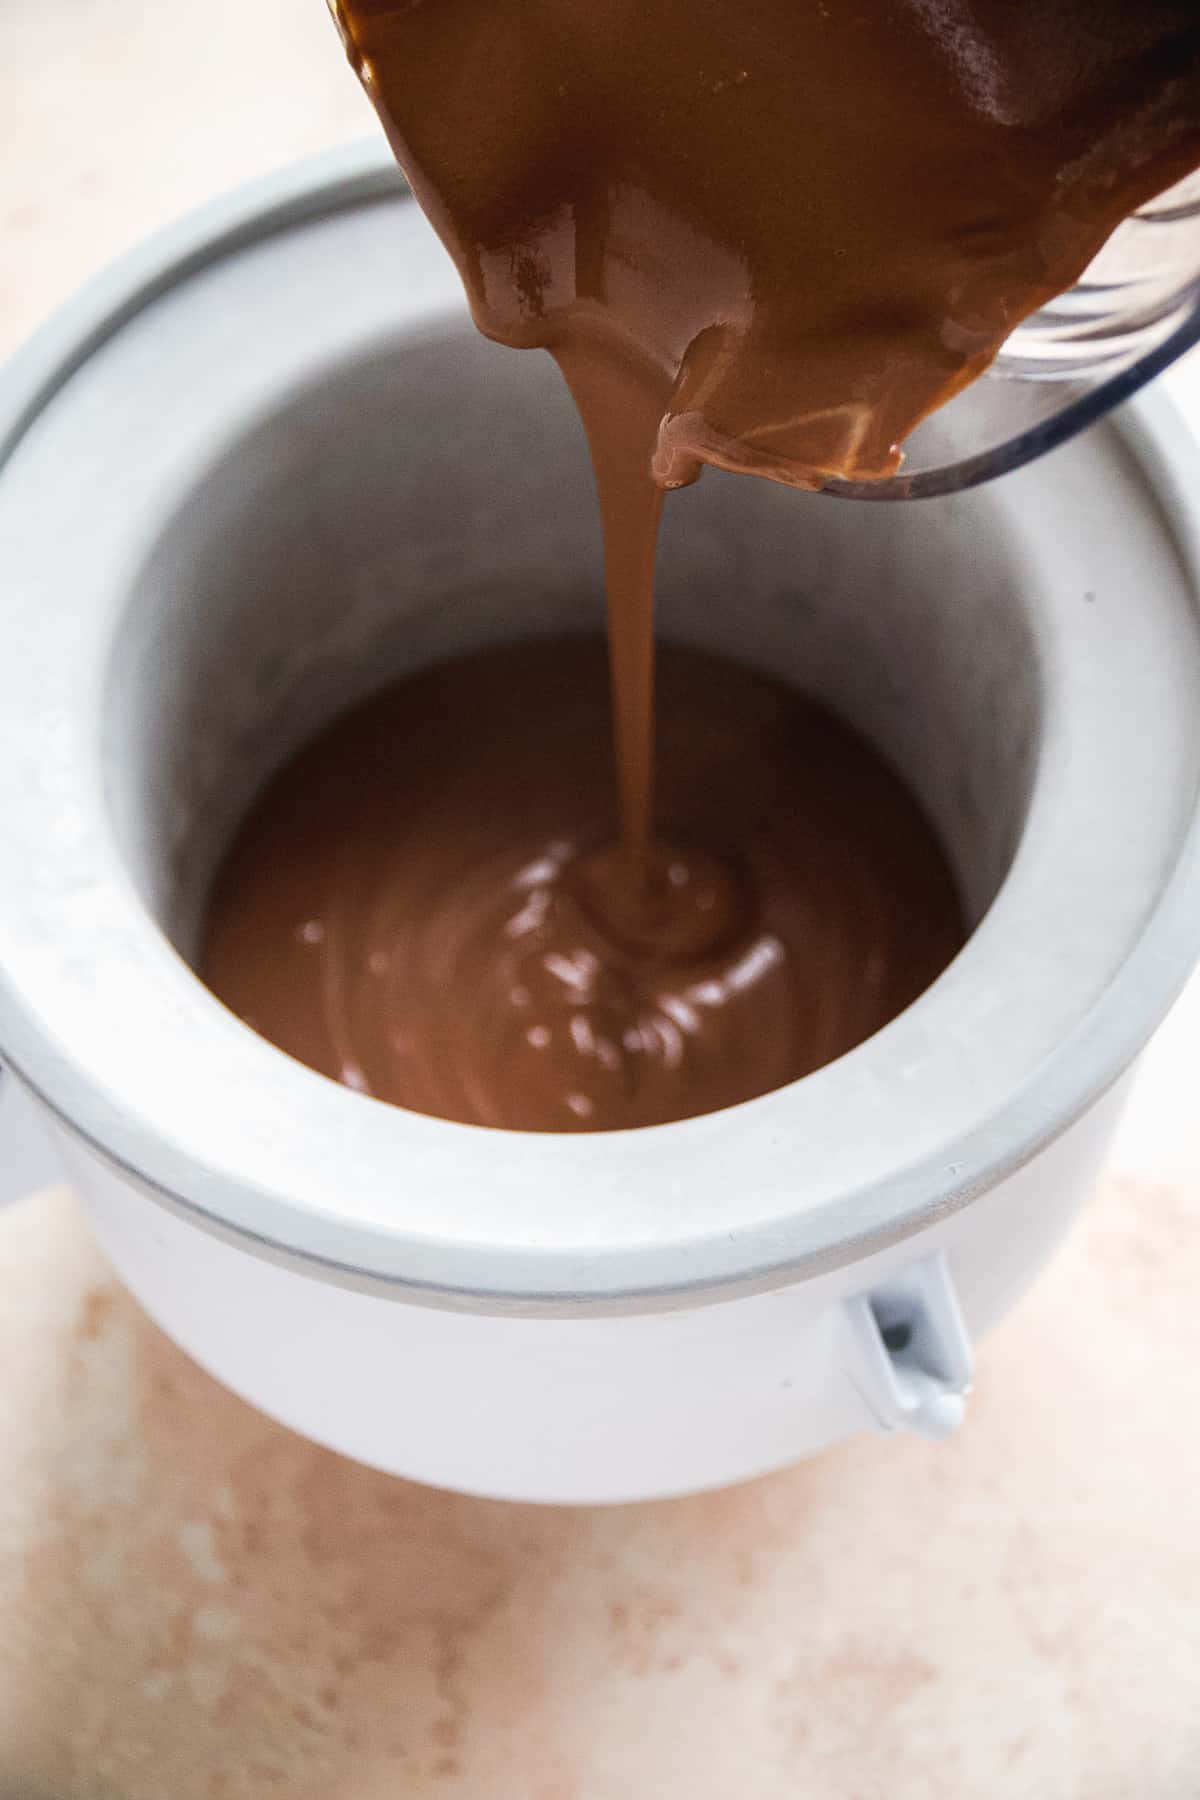 Chocolate yogurt mixture being poured into an ice cream maker.